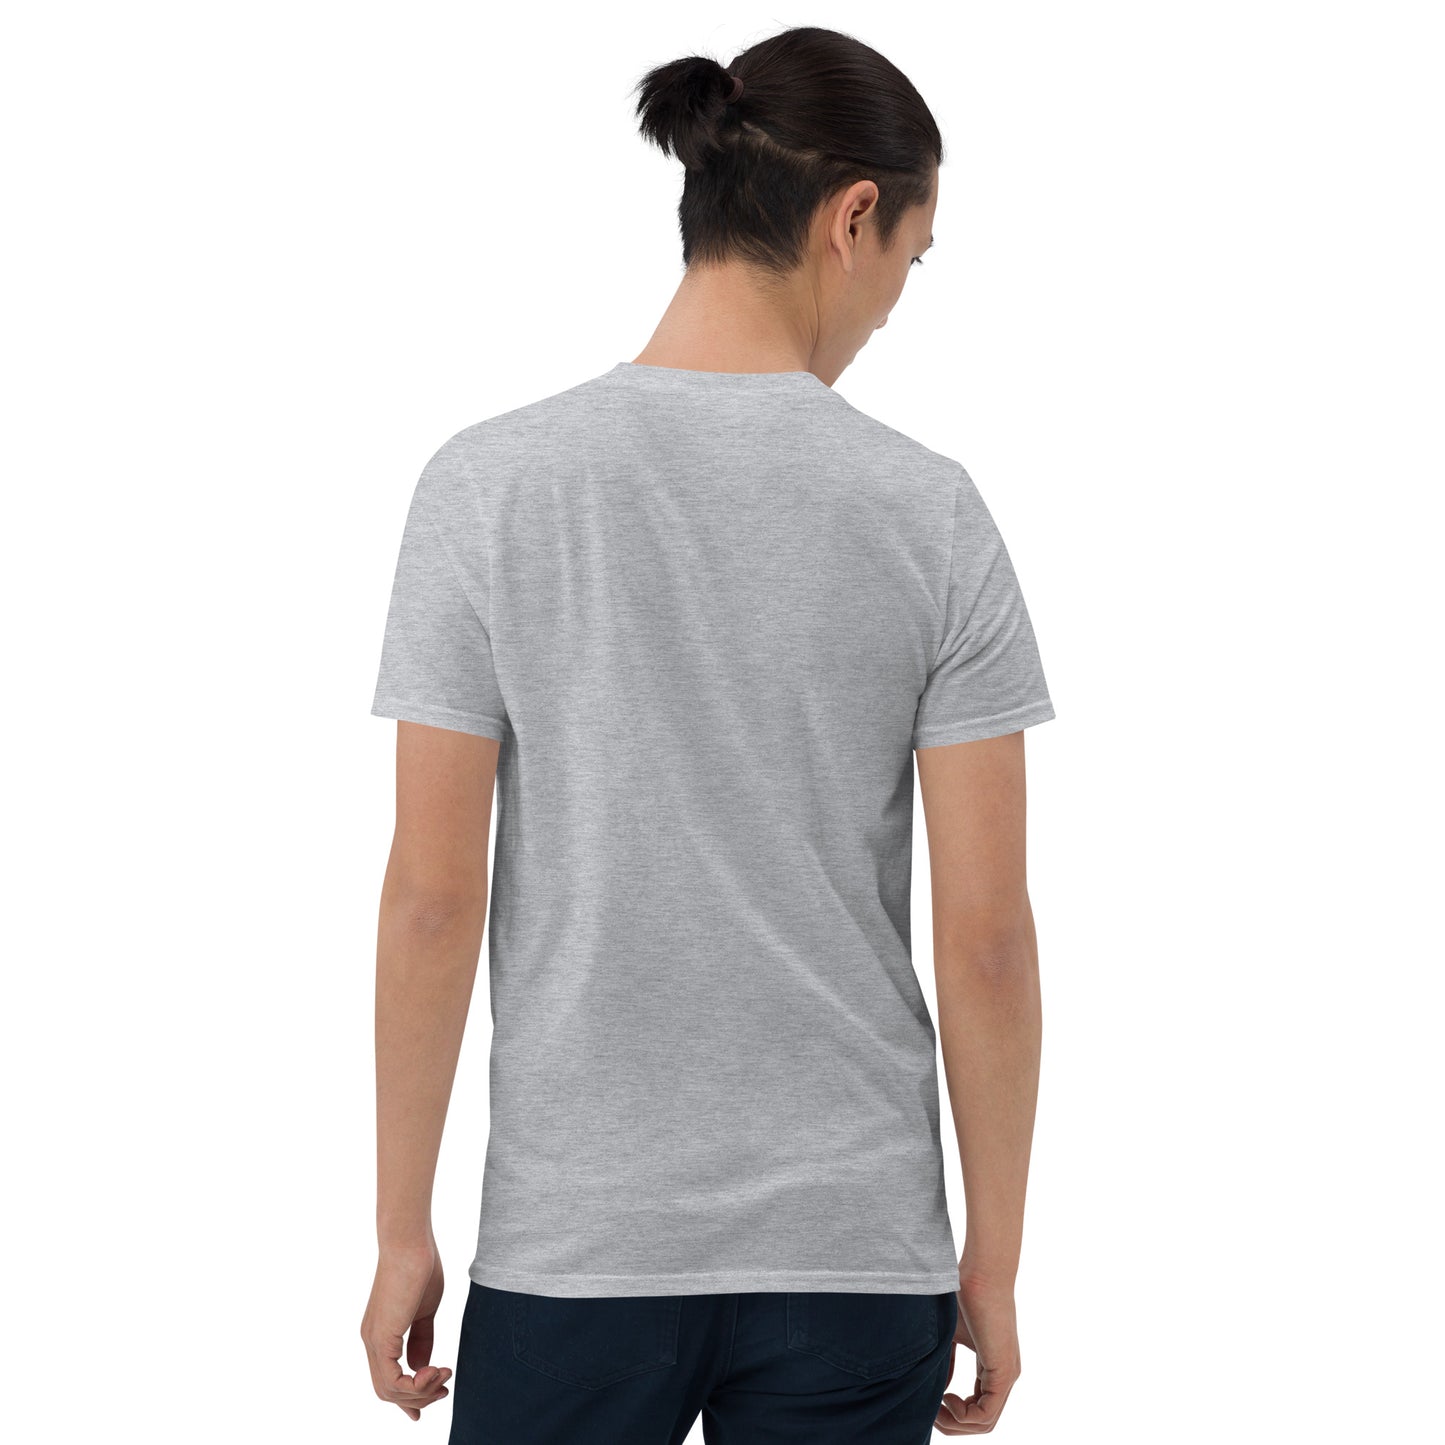 Basic REHOPE T-Shirt